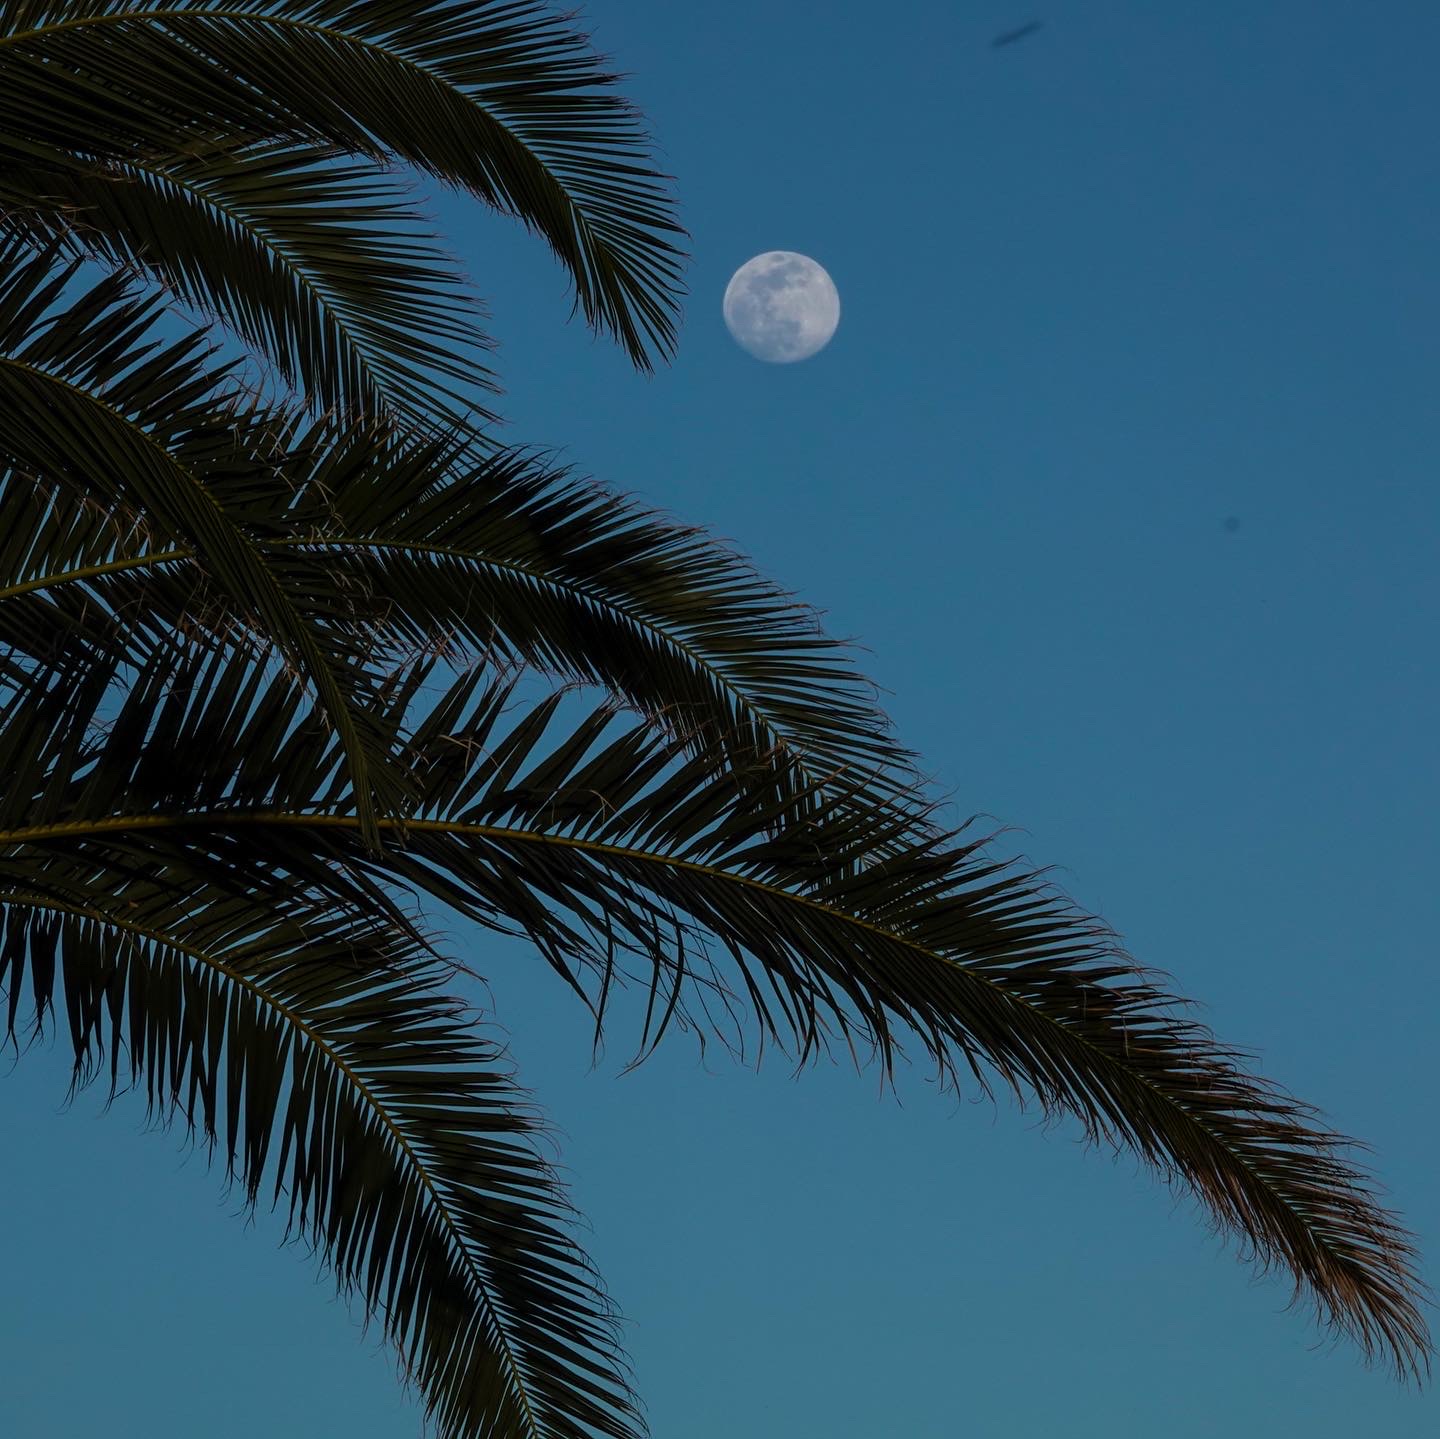 Palm Tree and moon on blue sky